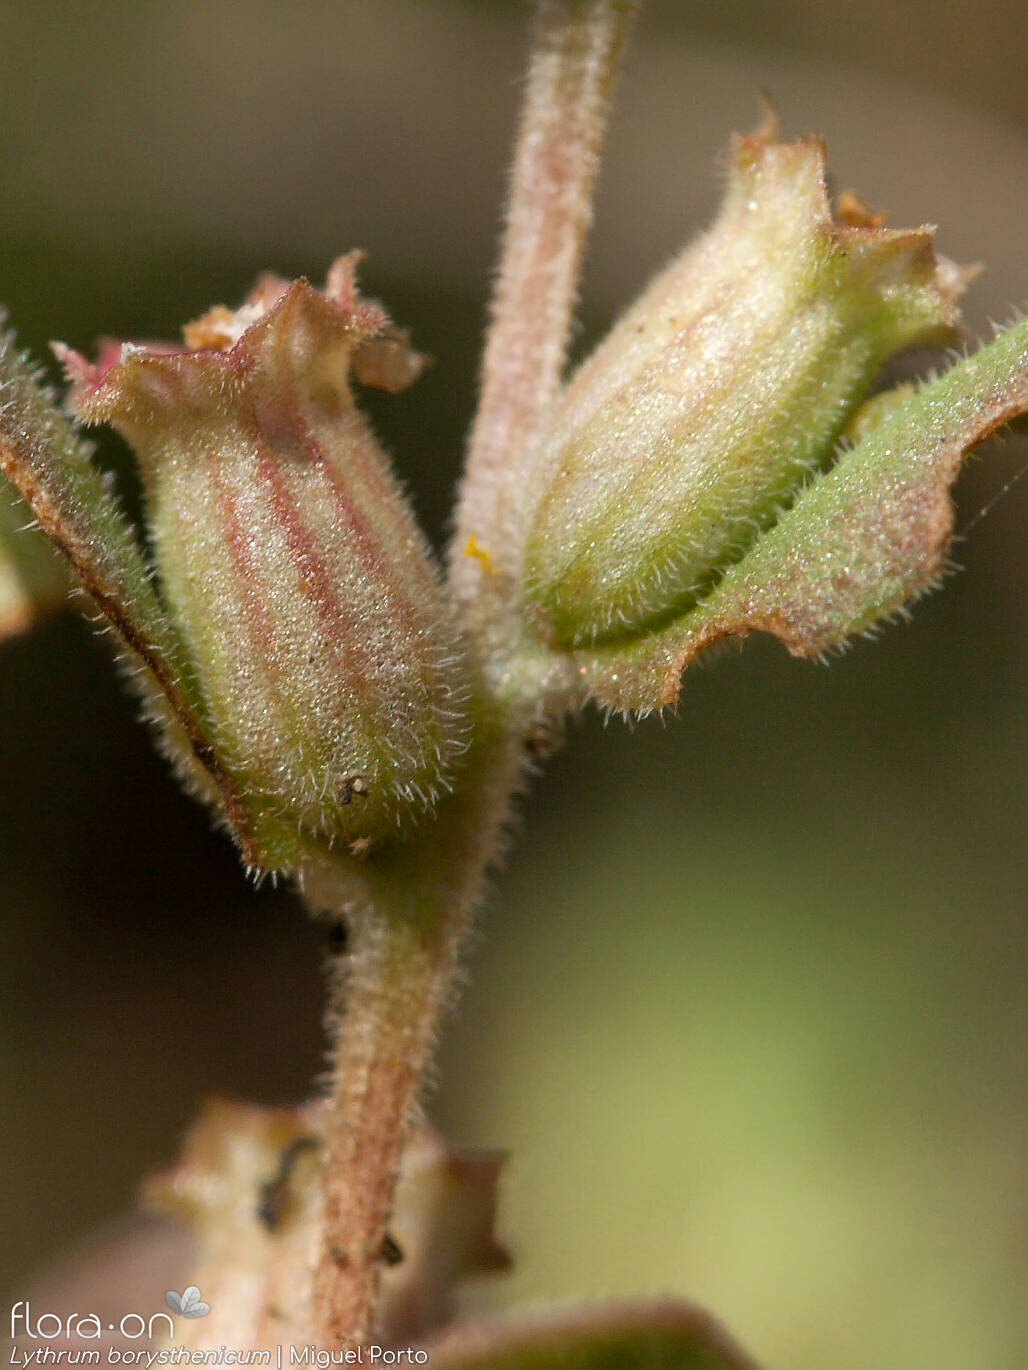 Lythrum borysthenicum - Fruto | Miguel Porto; CC BY-NC 4.0